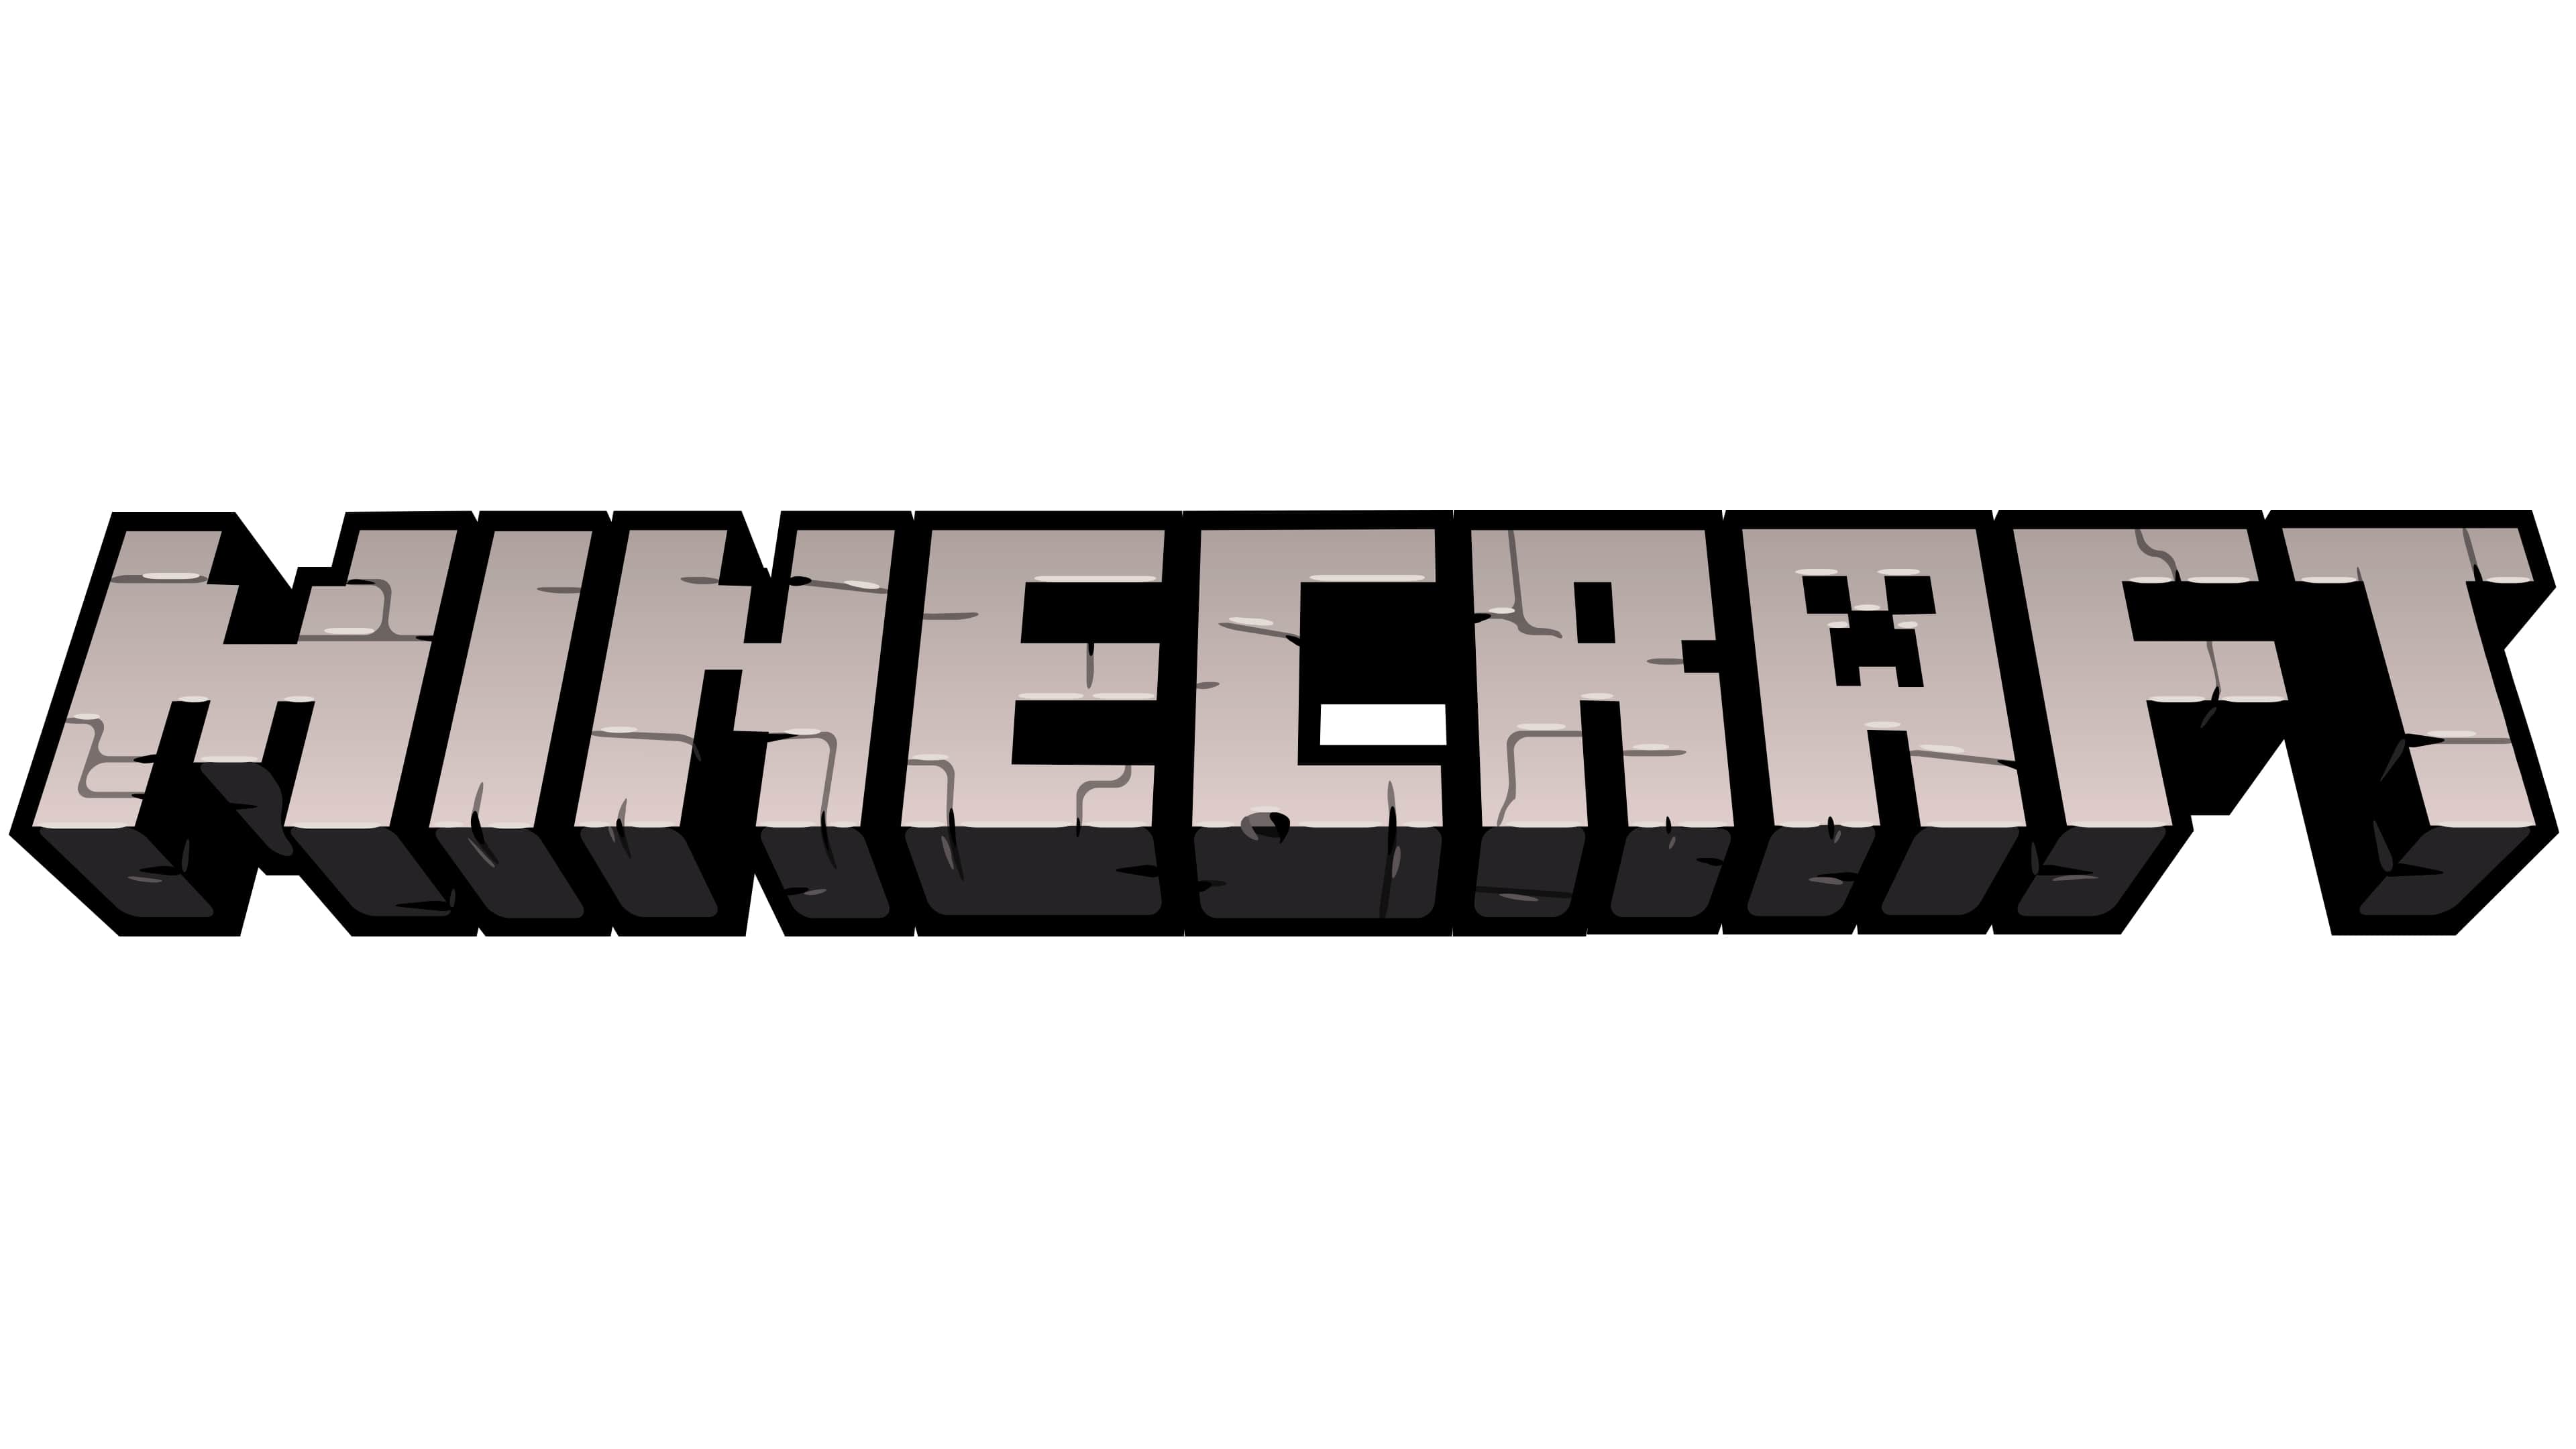 Minecraft on Nintendo switch family account - Microsoft Community